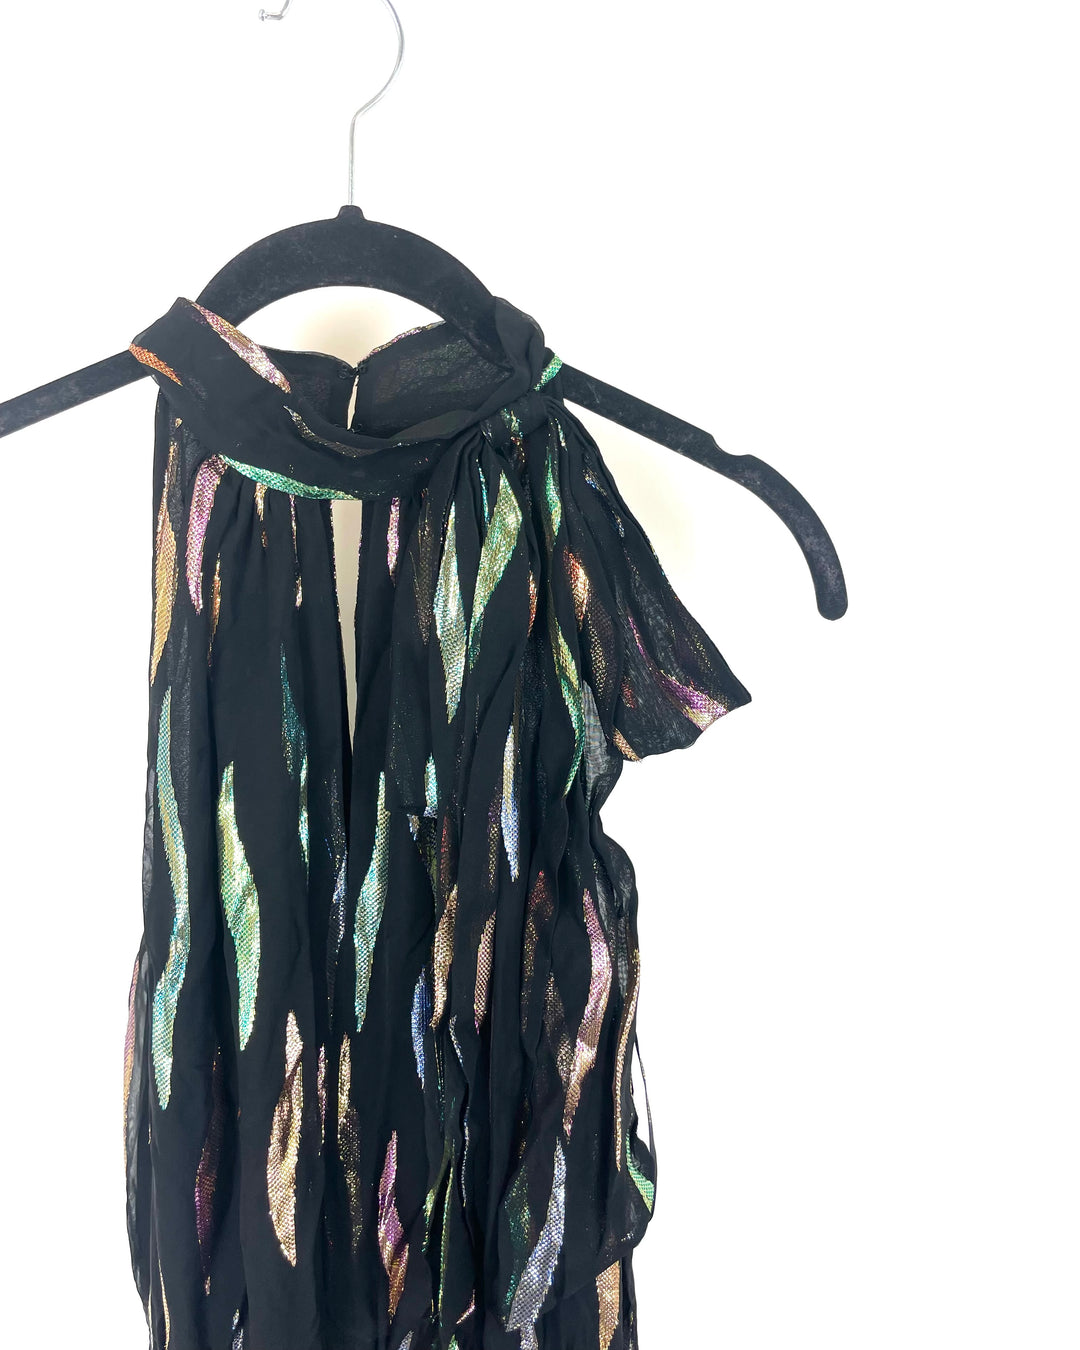 Black Mockneck Metallic Dress - Size 6/8